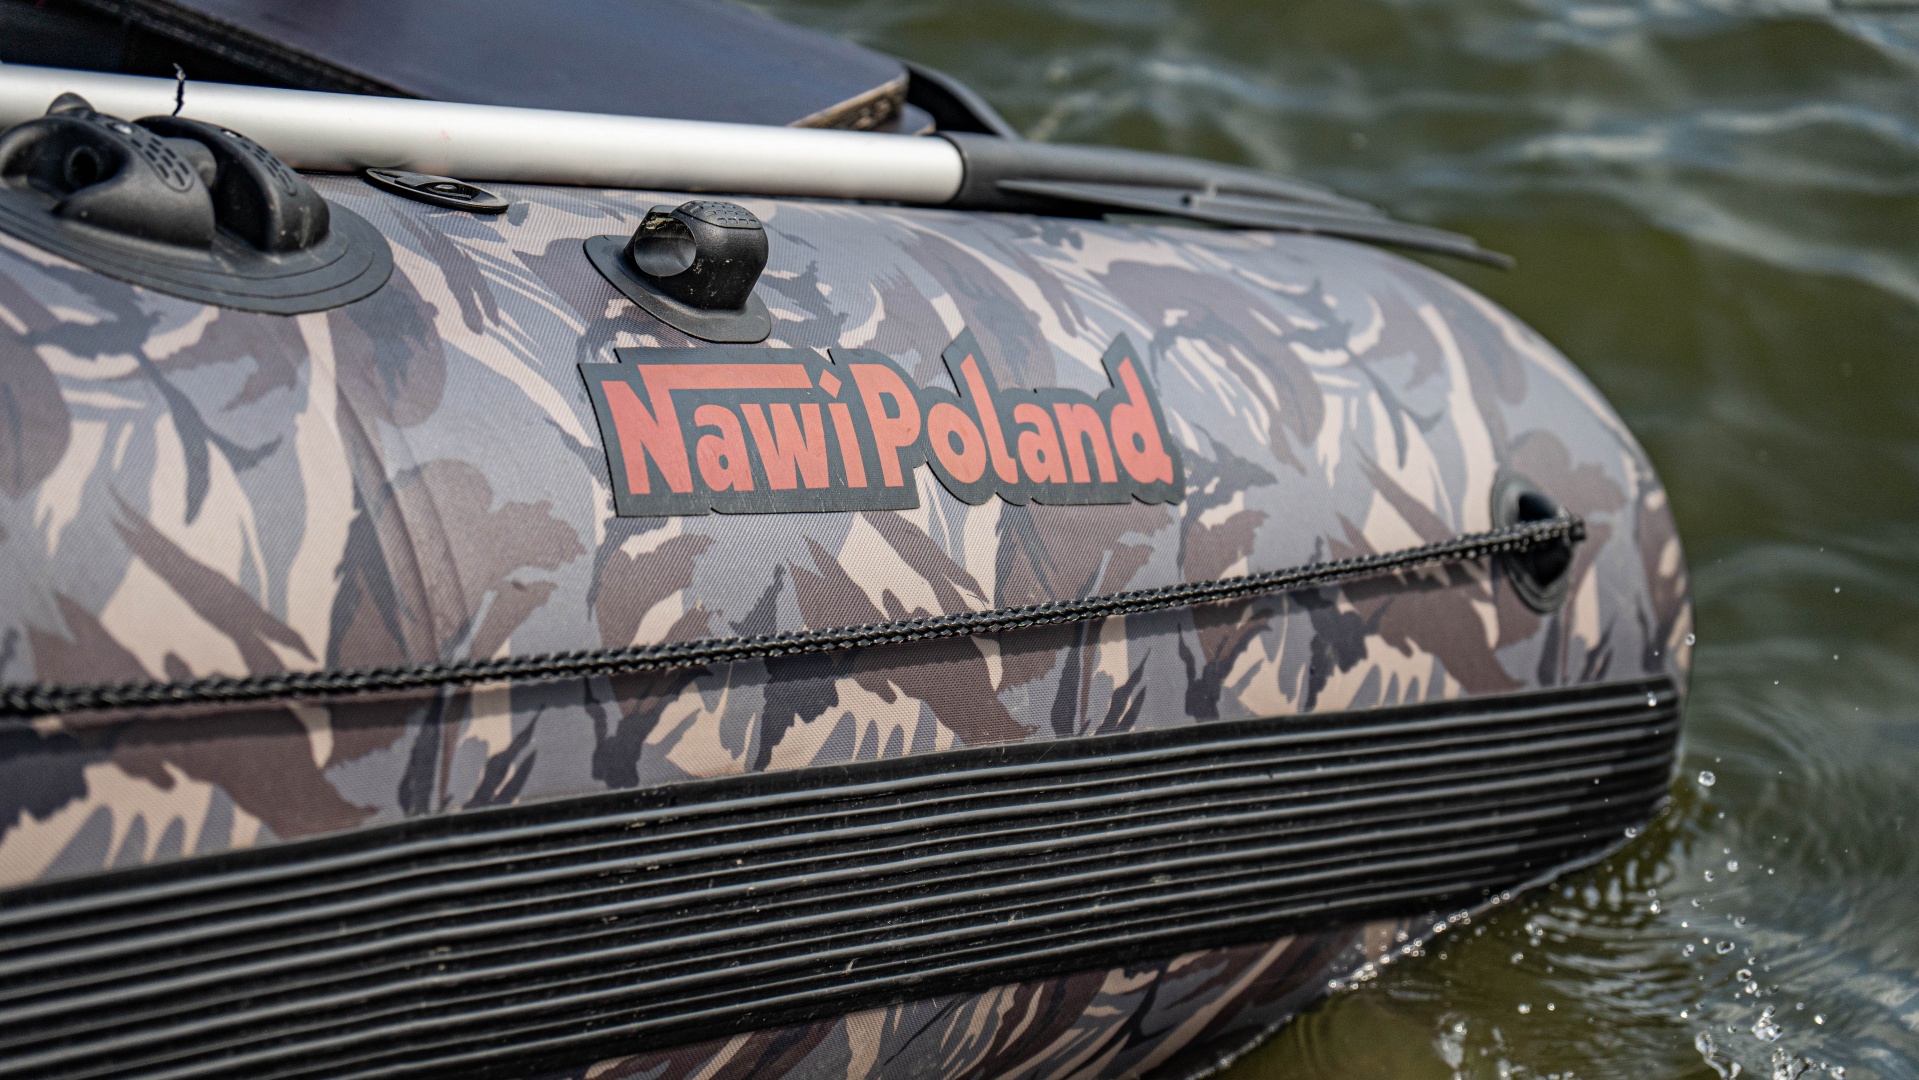 NawiPoland CAT 260 Inflatable Boat  - Catamarano